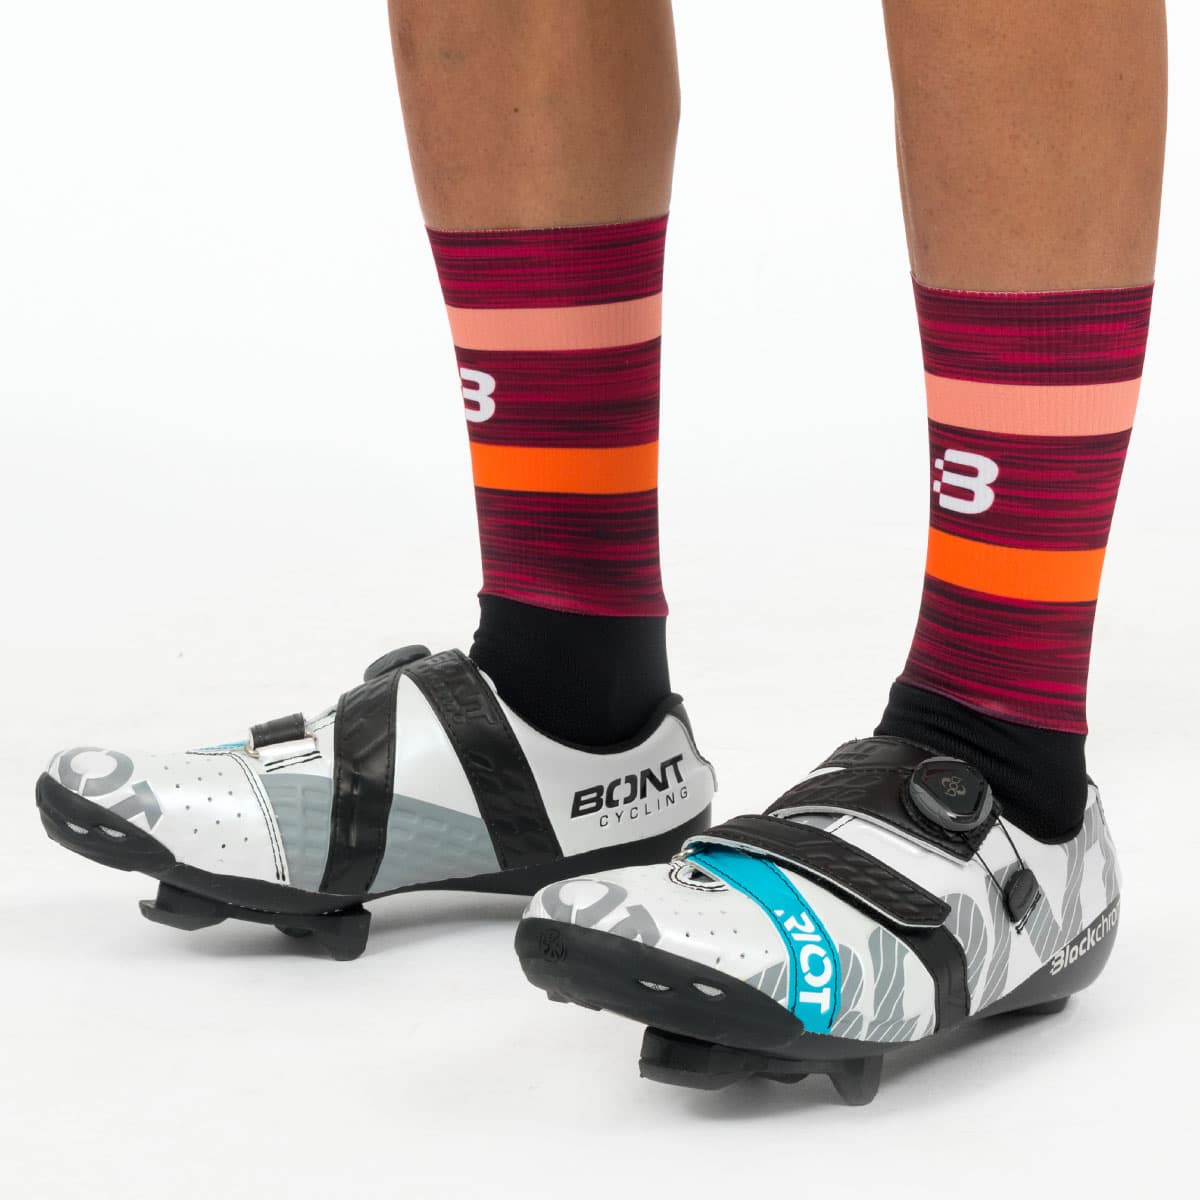 Download Rails 3.0 Unisex 6in Cycling Sock - Peach - Blackchrome